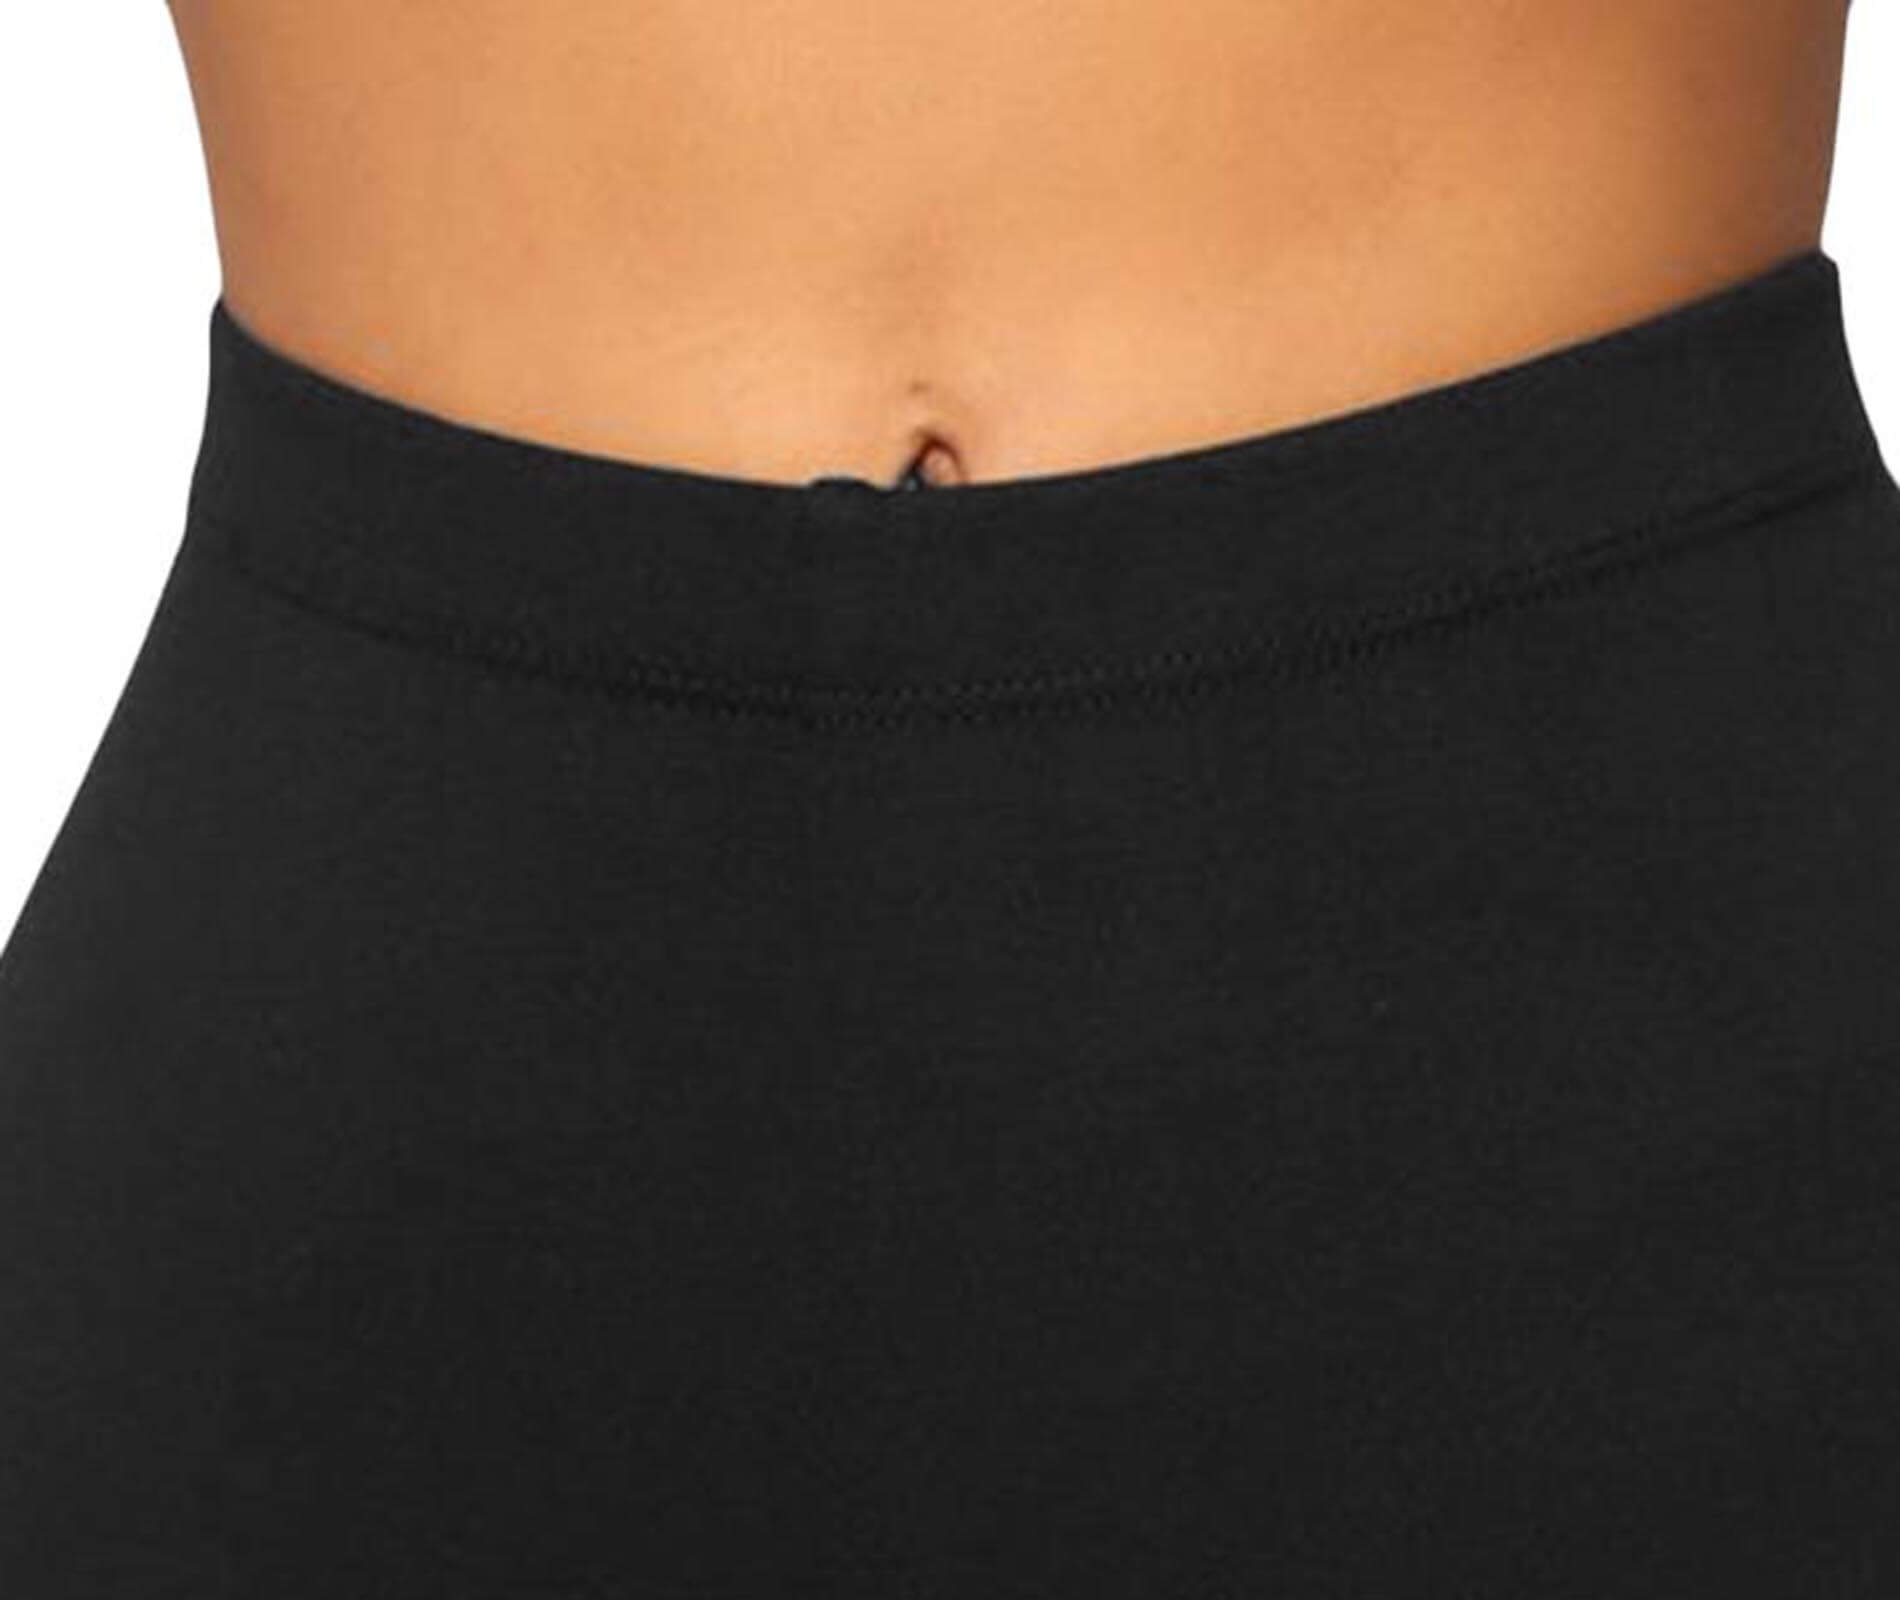  Women's Yoga Shorts Fuck Off Printed High Waisted Tummy Control Short Leggings Workout Running Shorts